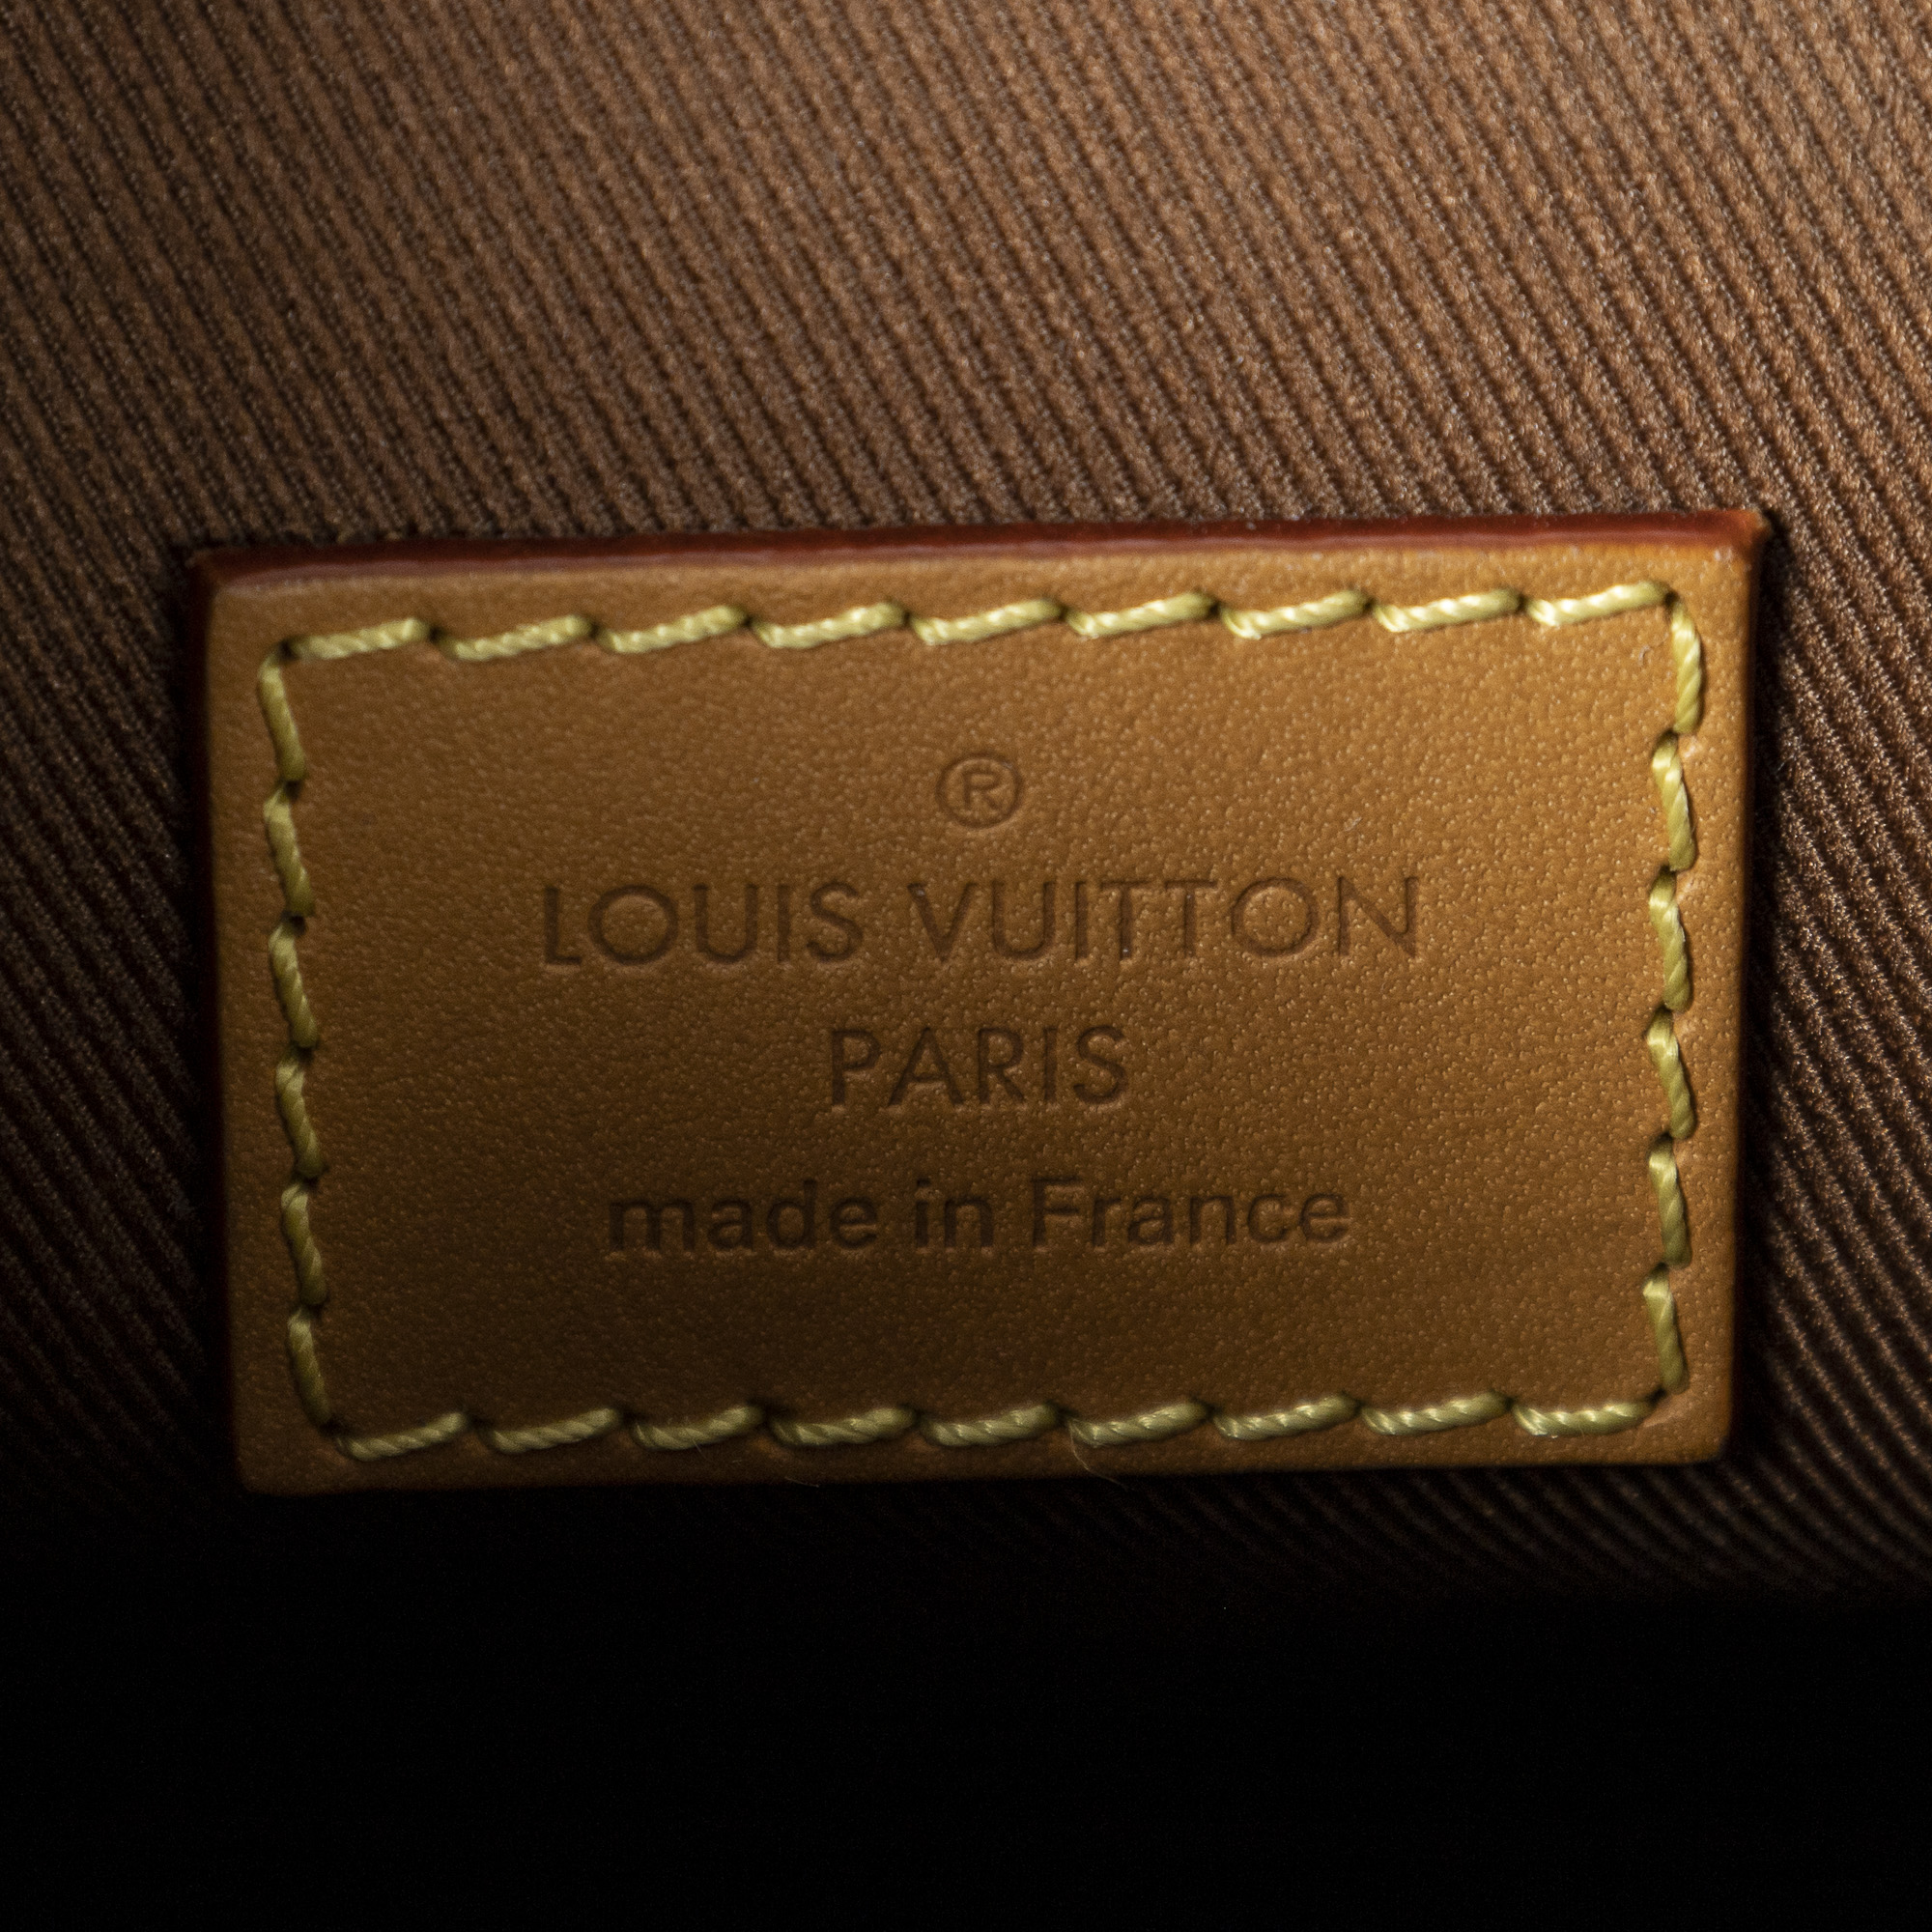 Virgil Abloh & Louis Vuitton – Buy the goddamn bag